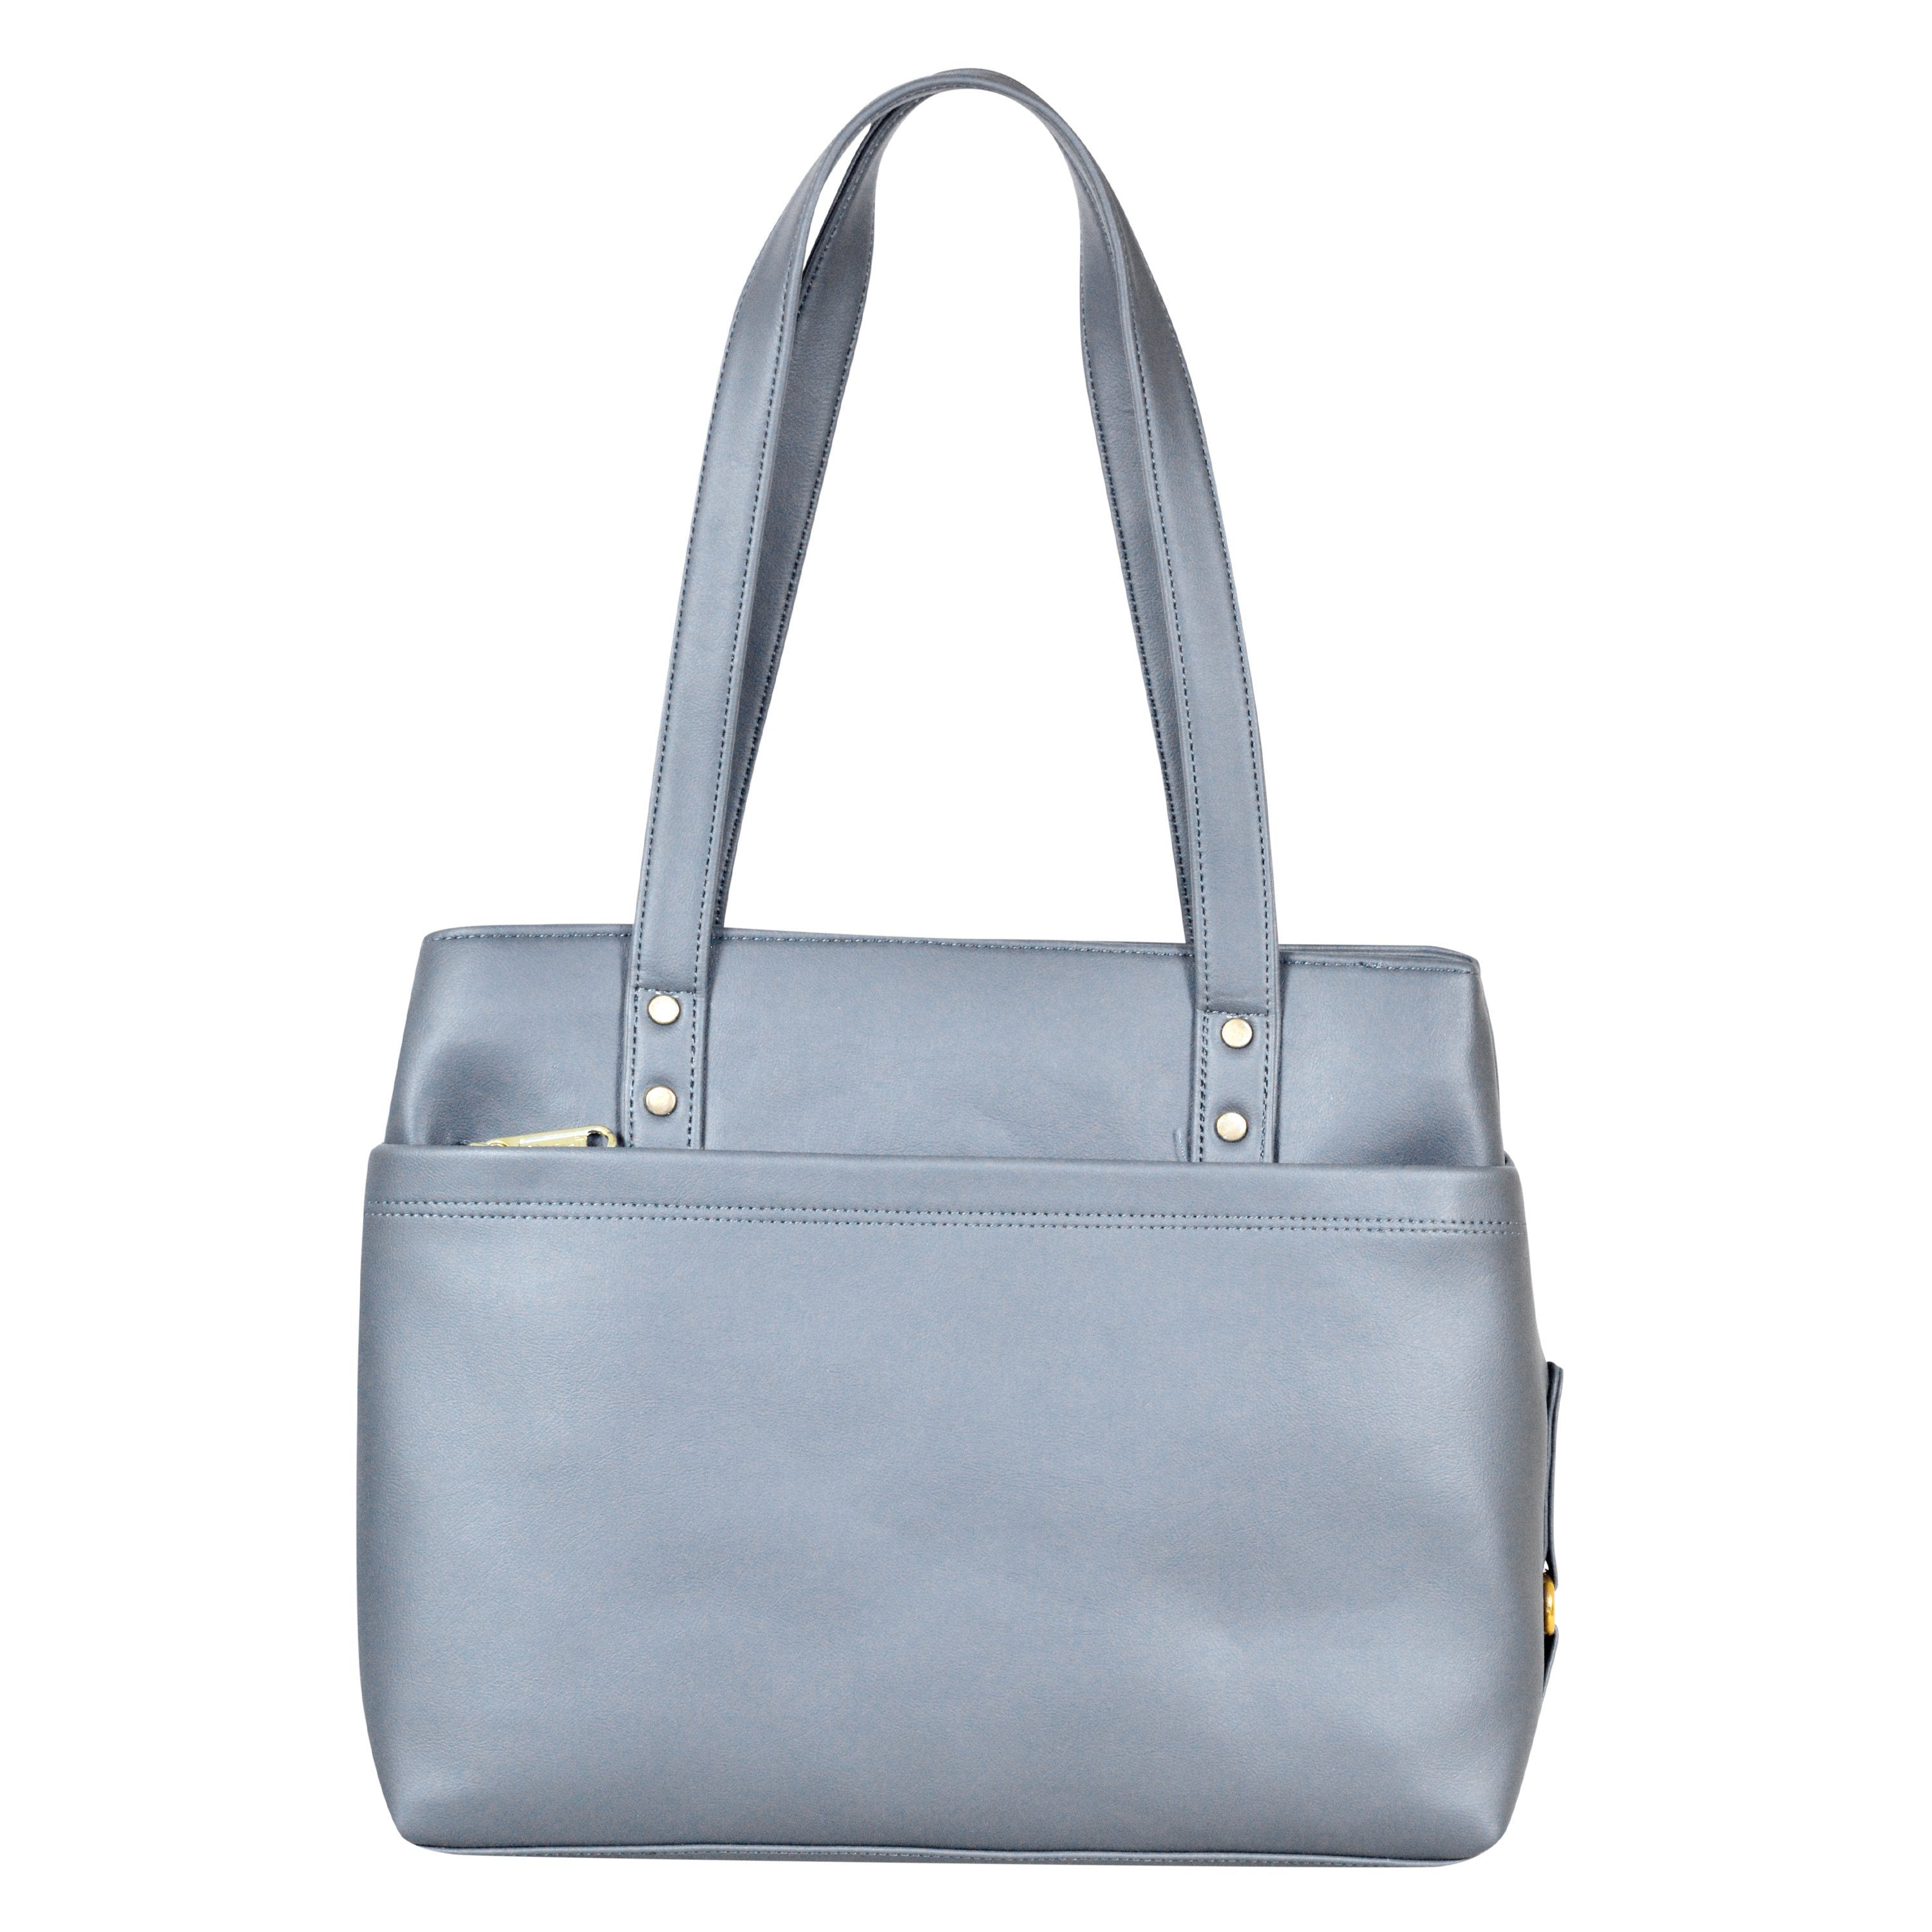 purse बनाने का सबसे आसान तरीका/zipper purse /zipper handbag/ladies purse/hand  purse | Purses, Phone purse, Handbag